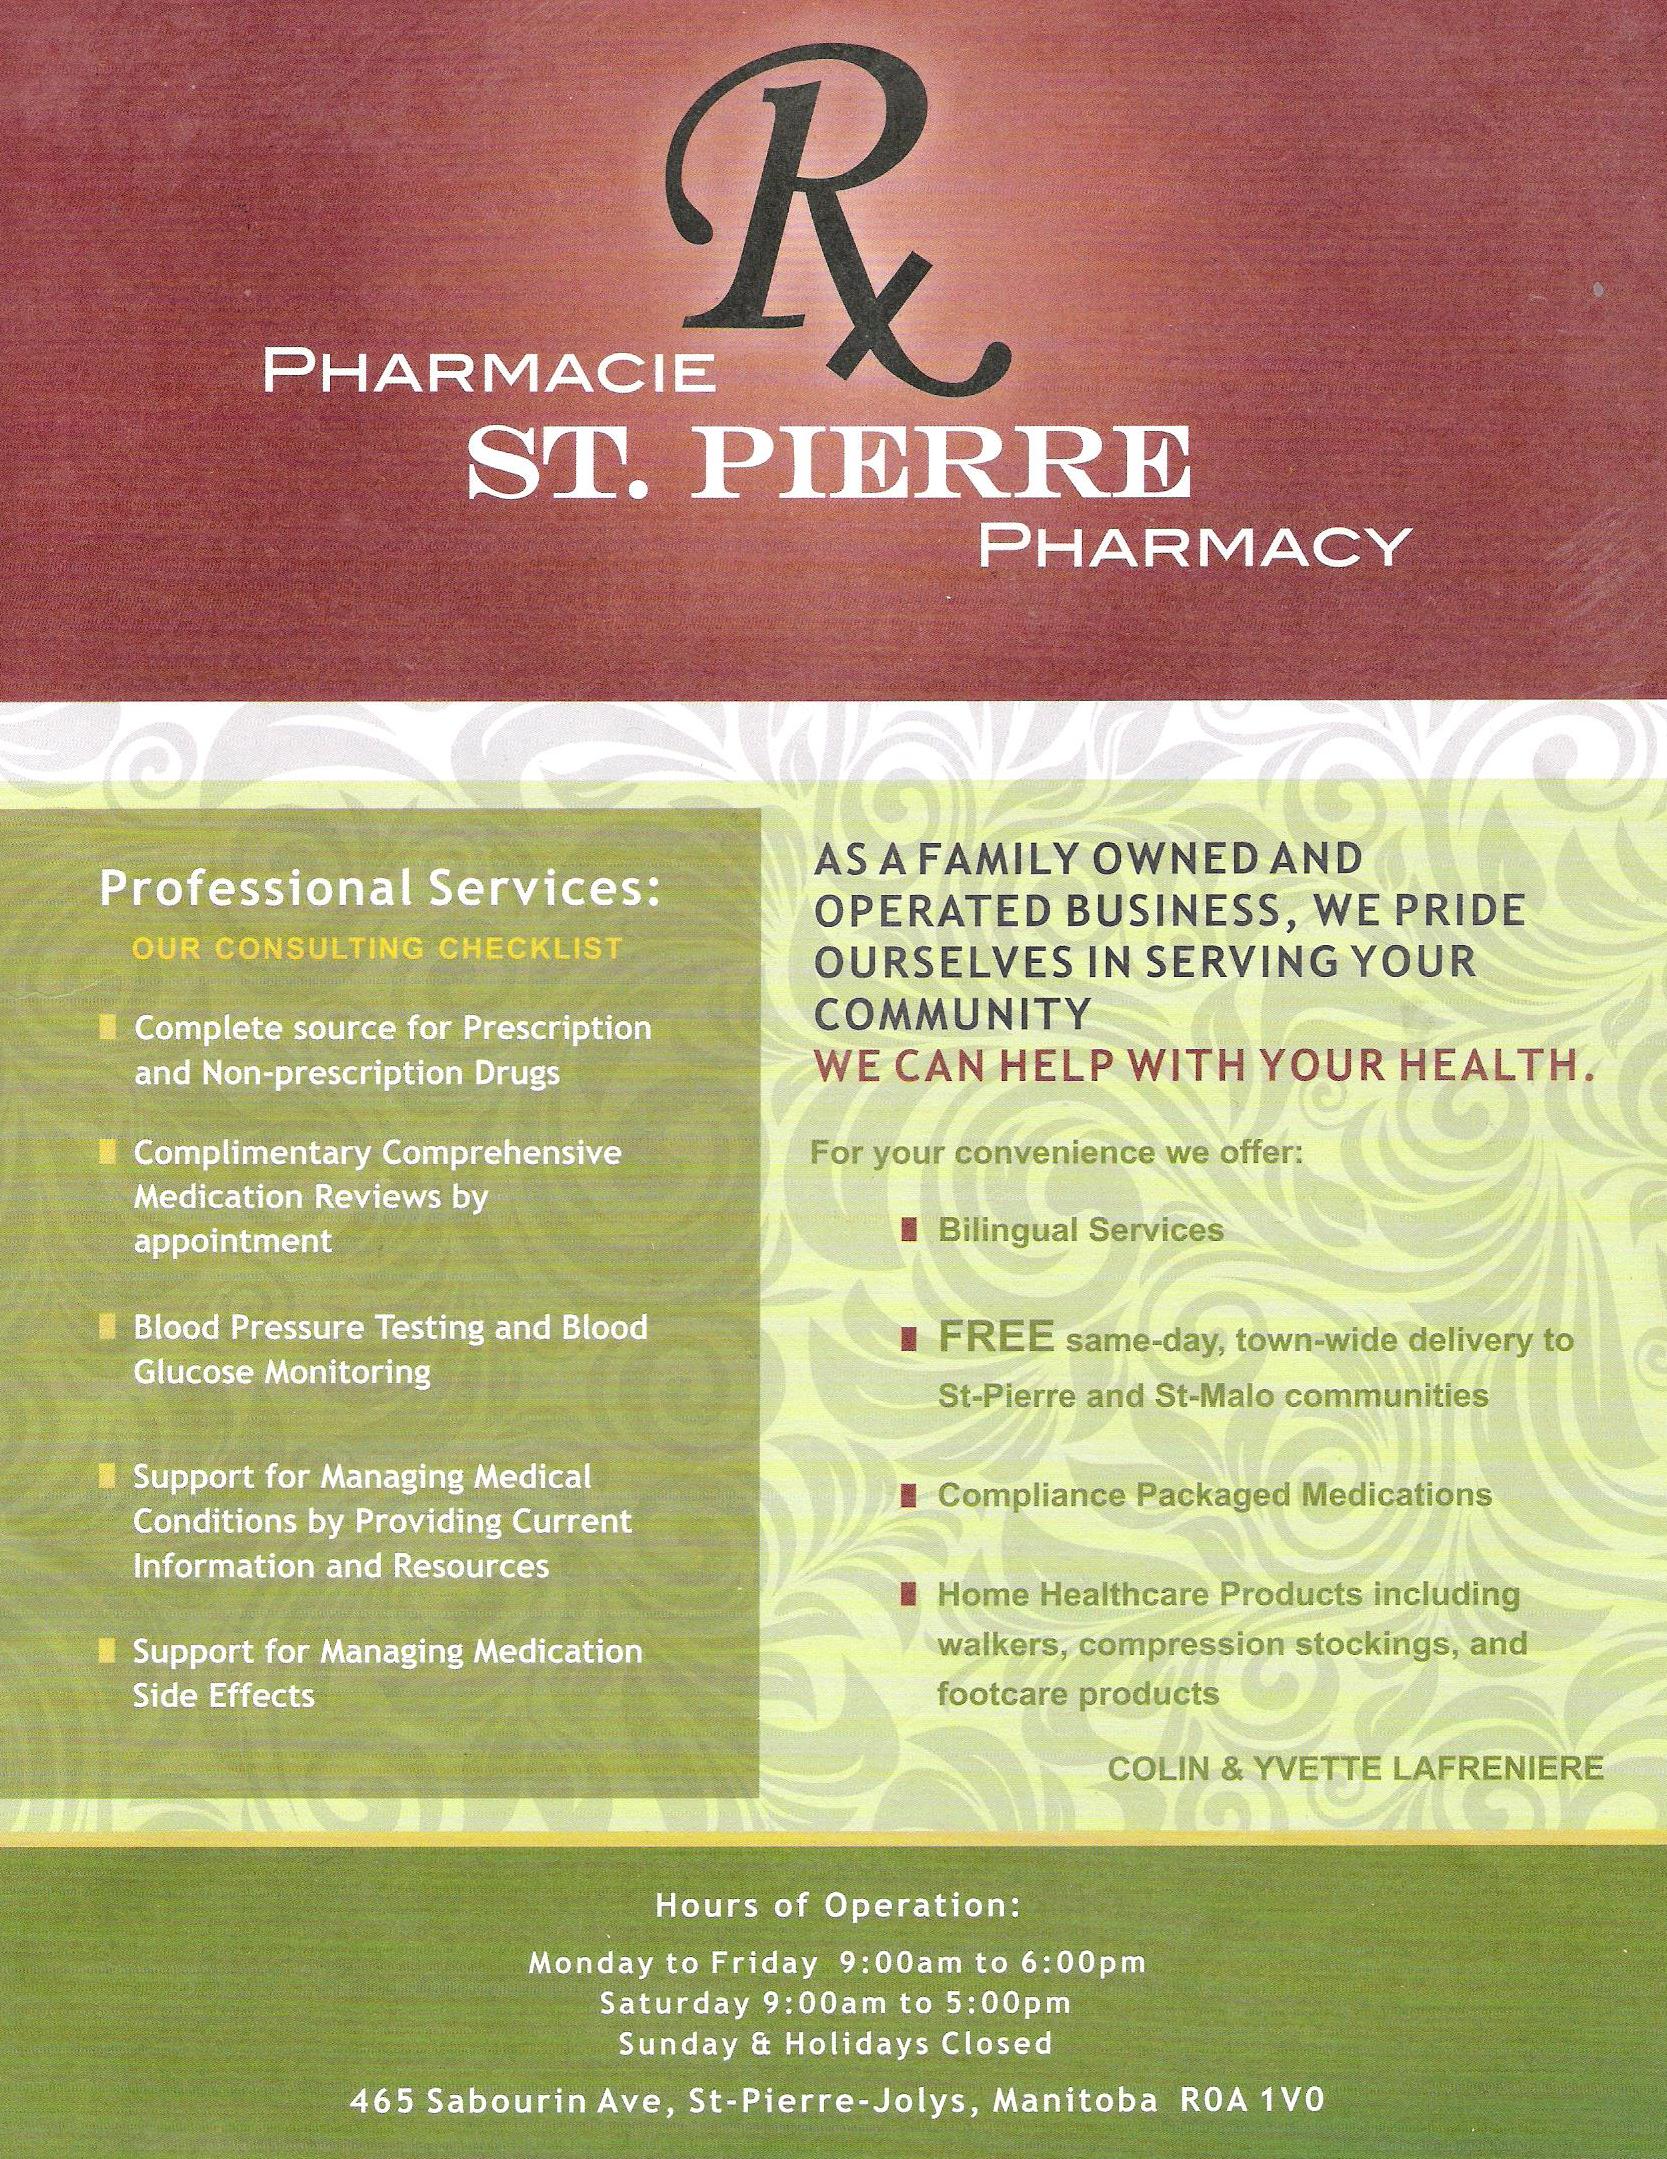 St. Pierre Pharmacy